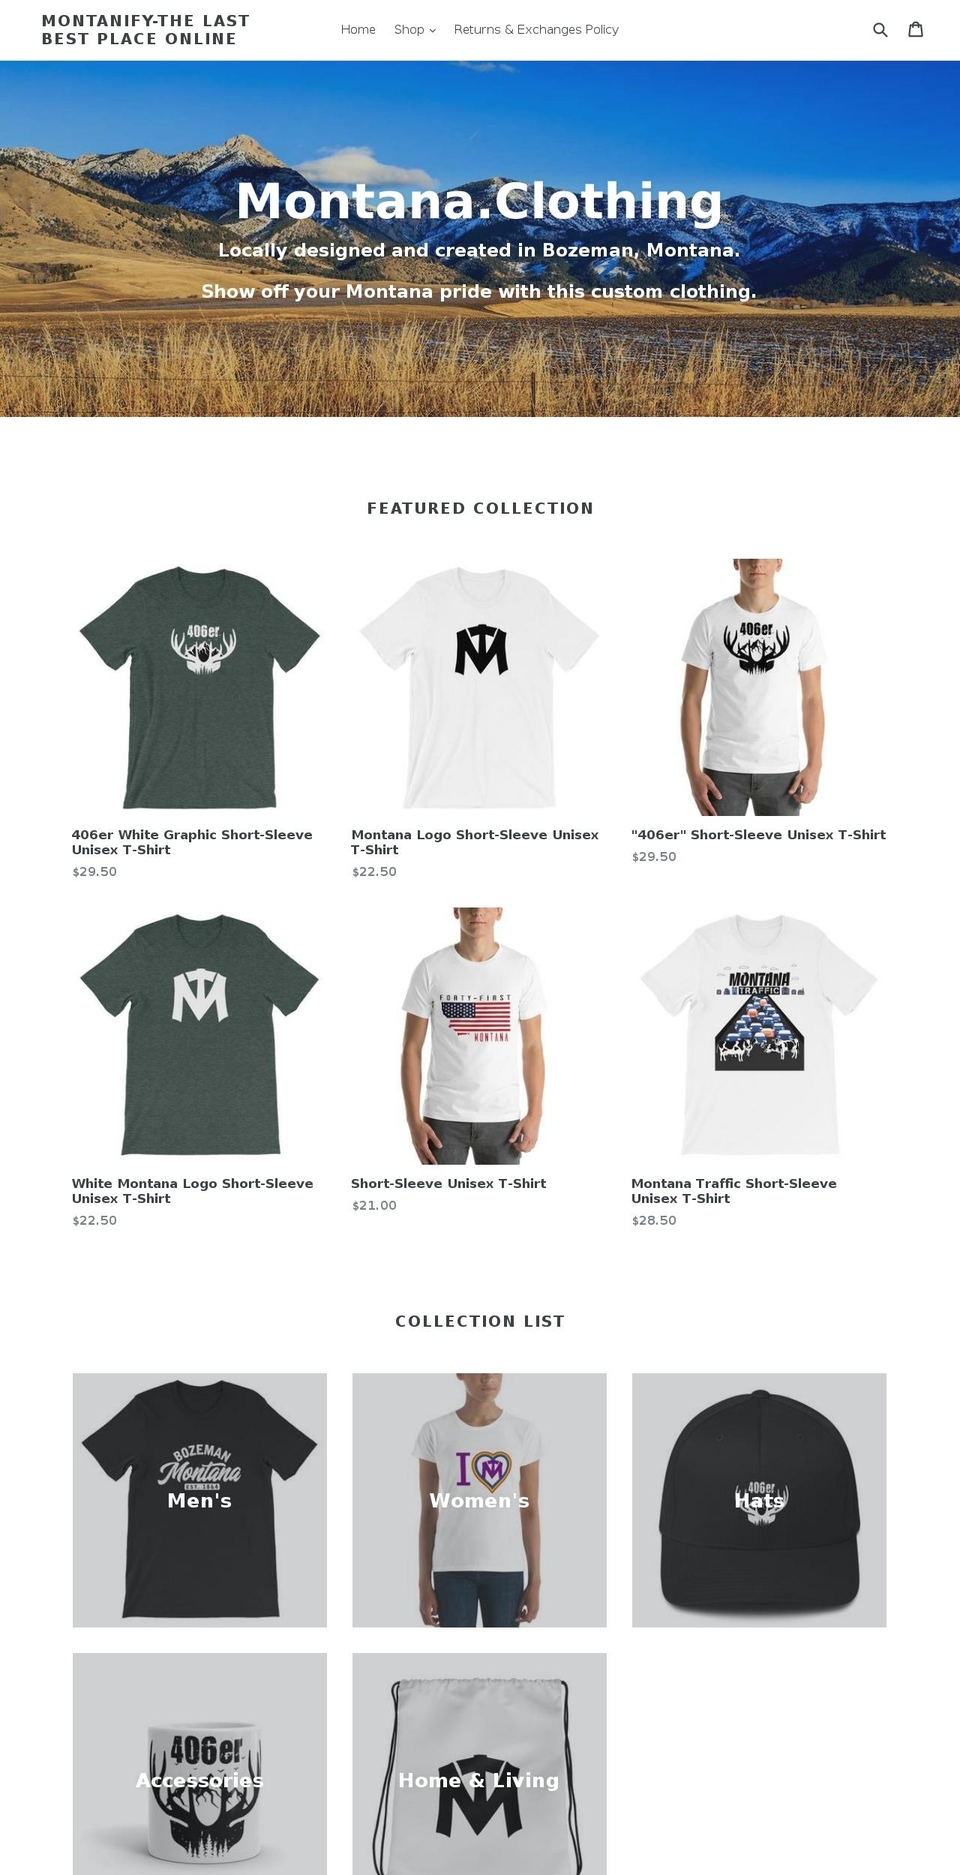 montana.clothing shopify website screenshot